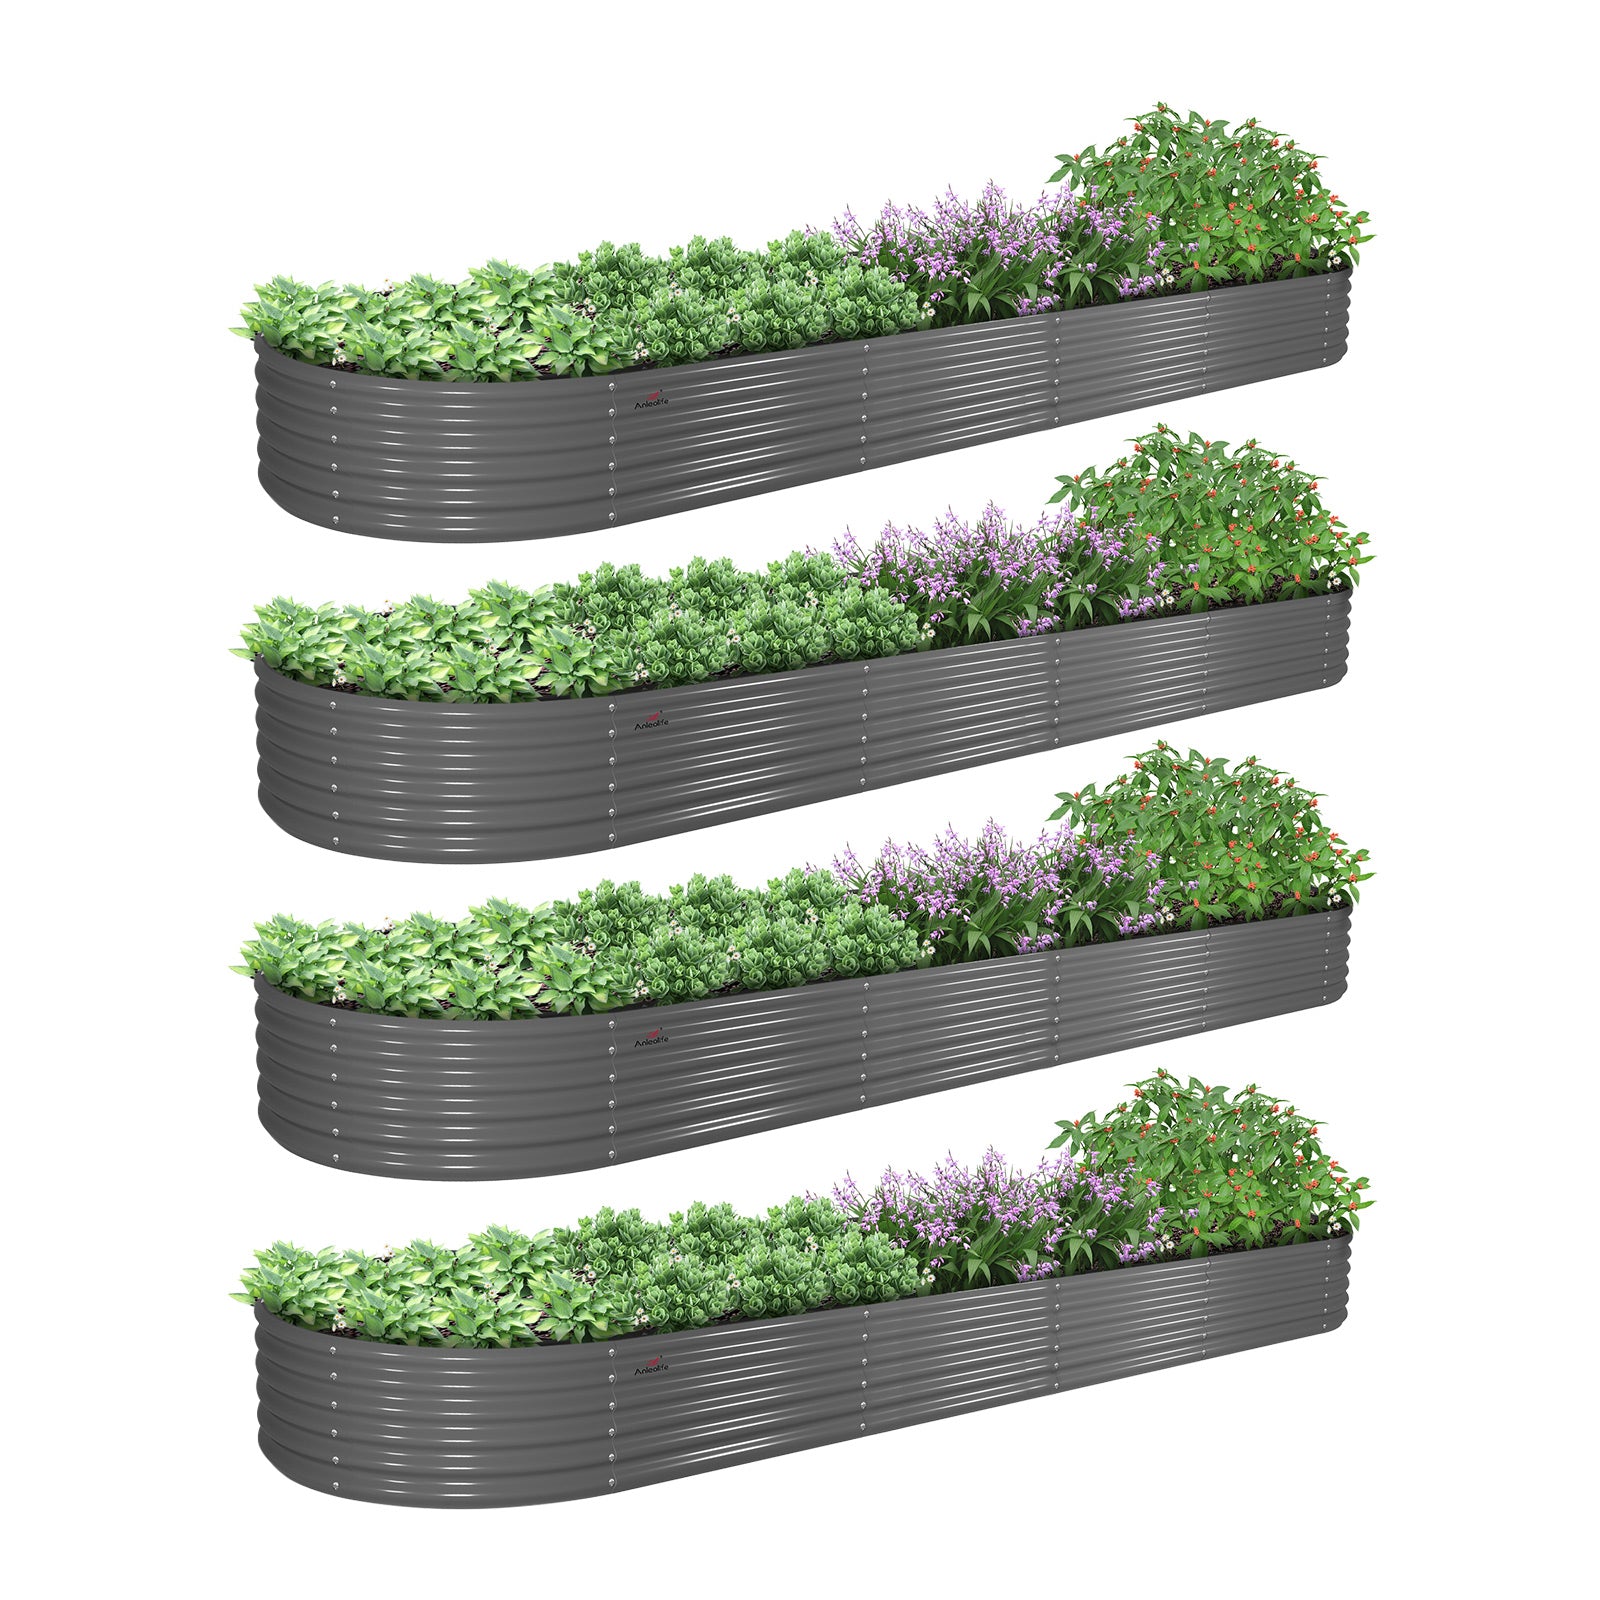 12x3x1.5ft Oval Modular Metal Raised Garden Bed Set (White/Grey)